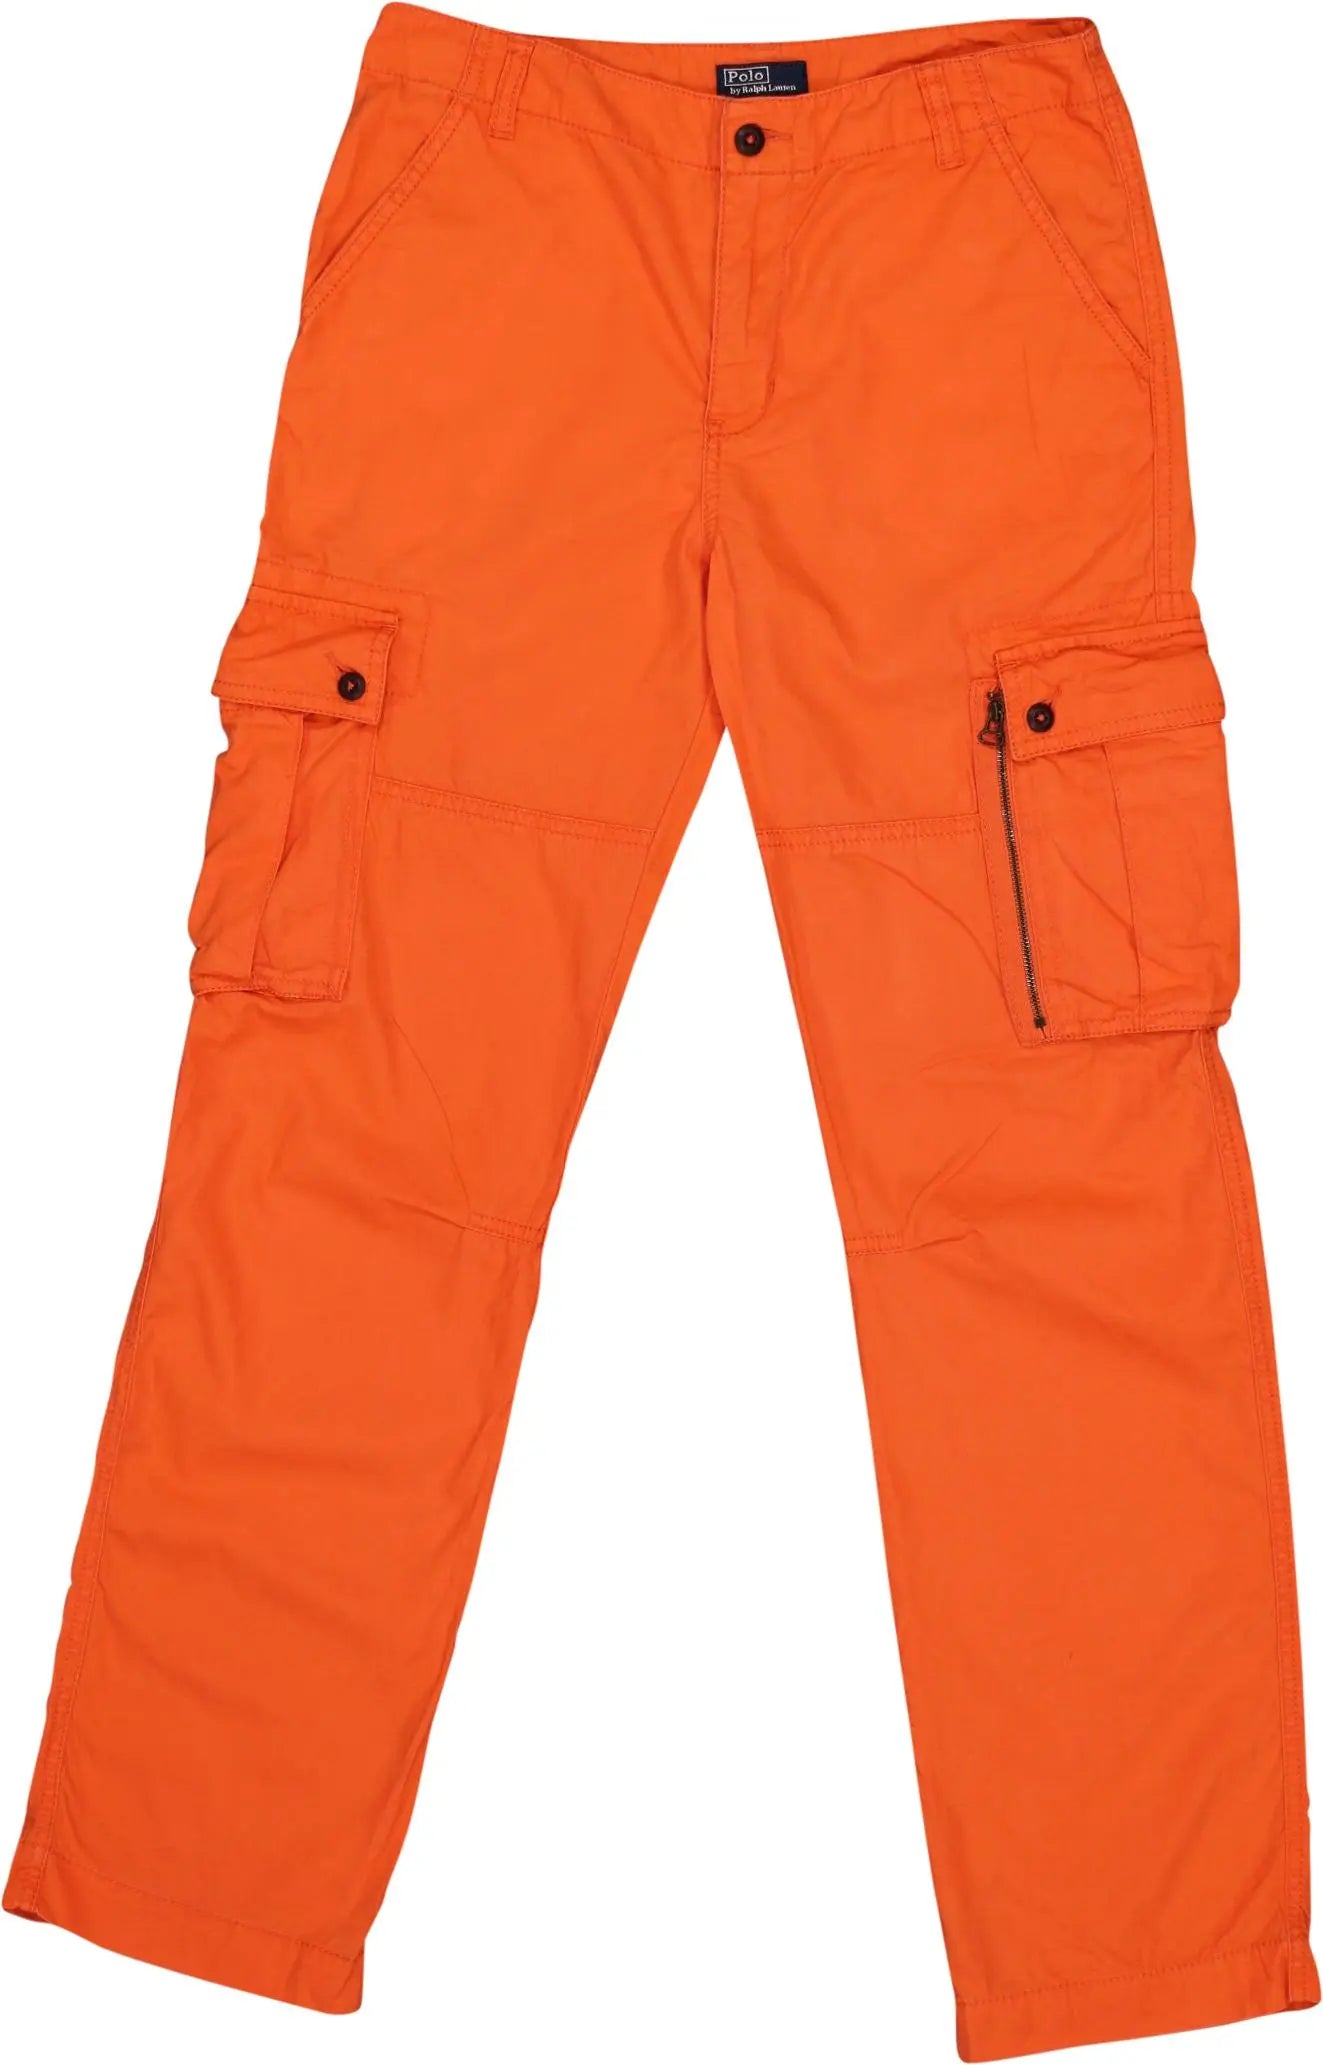 Ralph Lauren - Orange Trousers by Ralph Lauren- ThriftTale.com - Vintage and second handclothing